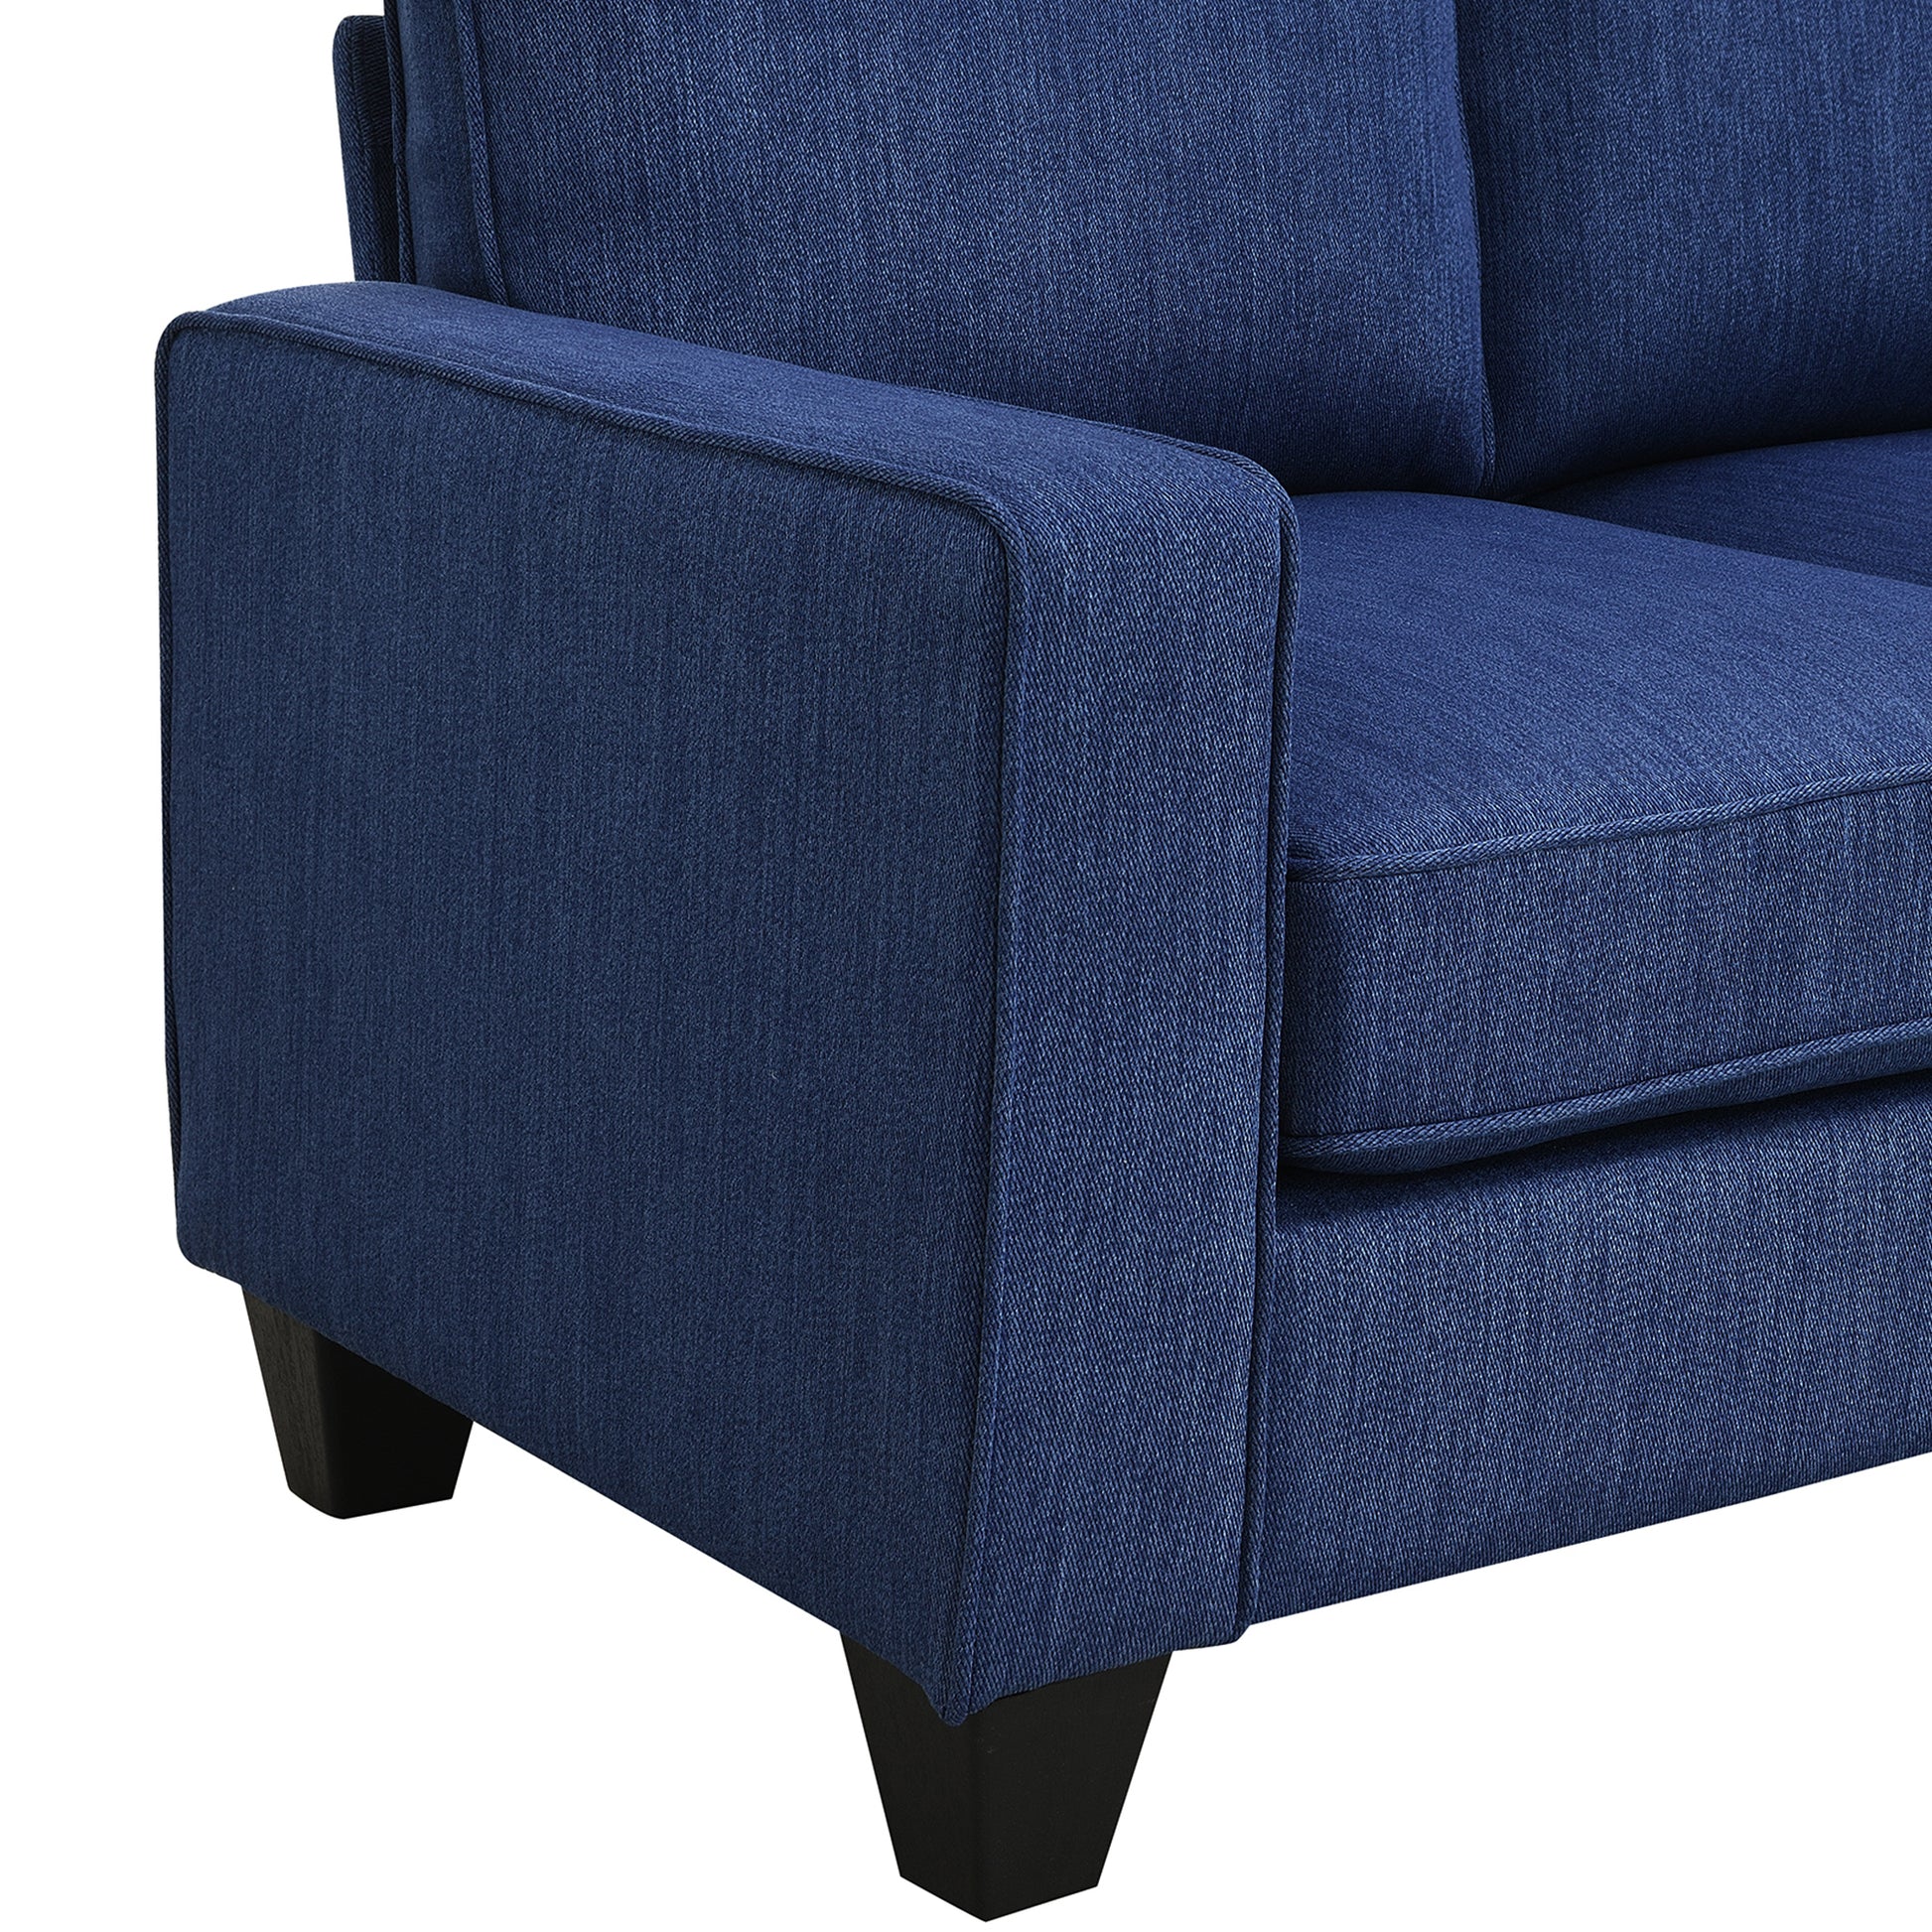 L-Shaped Sectional Sofa: 7-Seat Linen Set, Chaise, Convertible Ottoman, 3 Colors